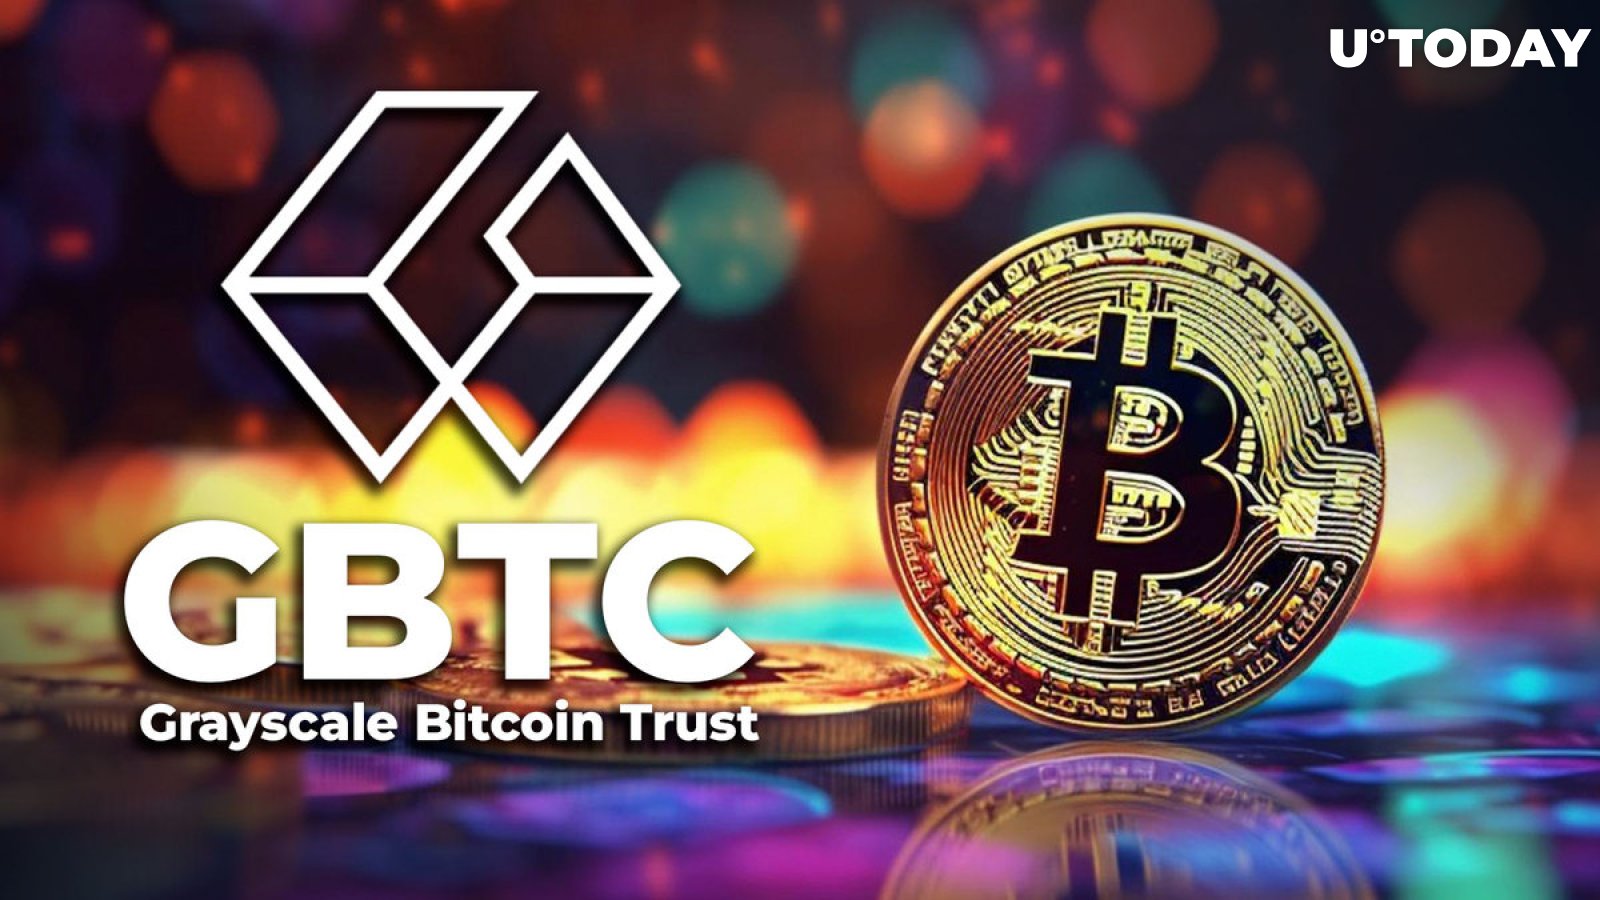 Grayscale Bitcoin Trust Turns 10, Announces Rebranding